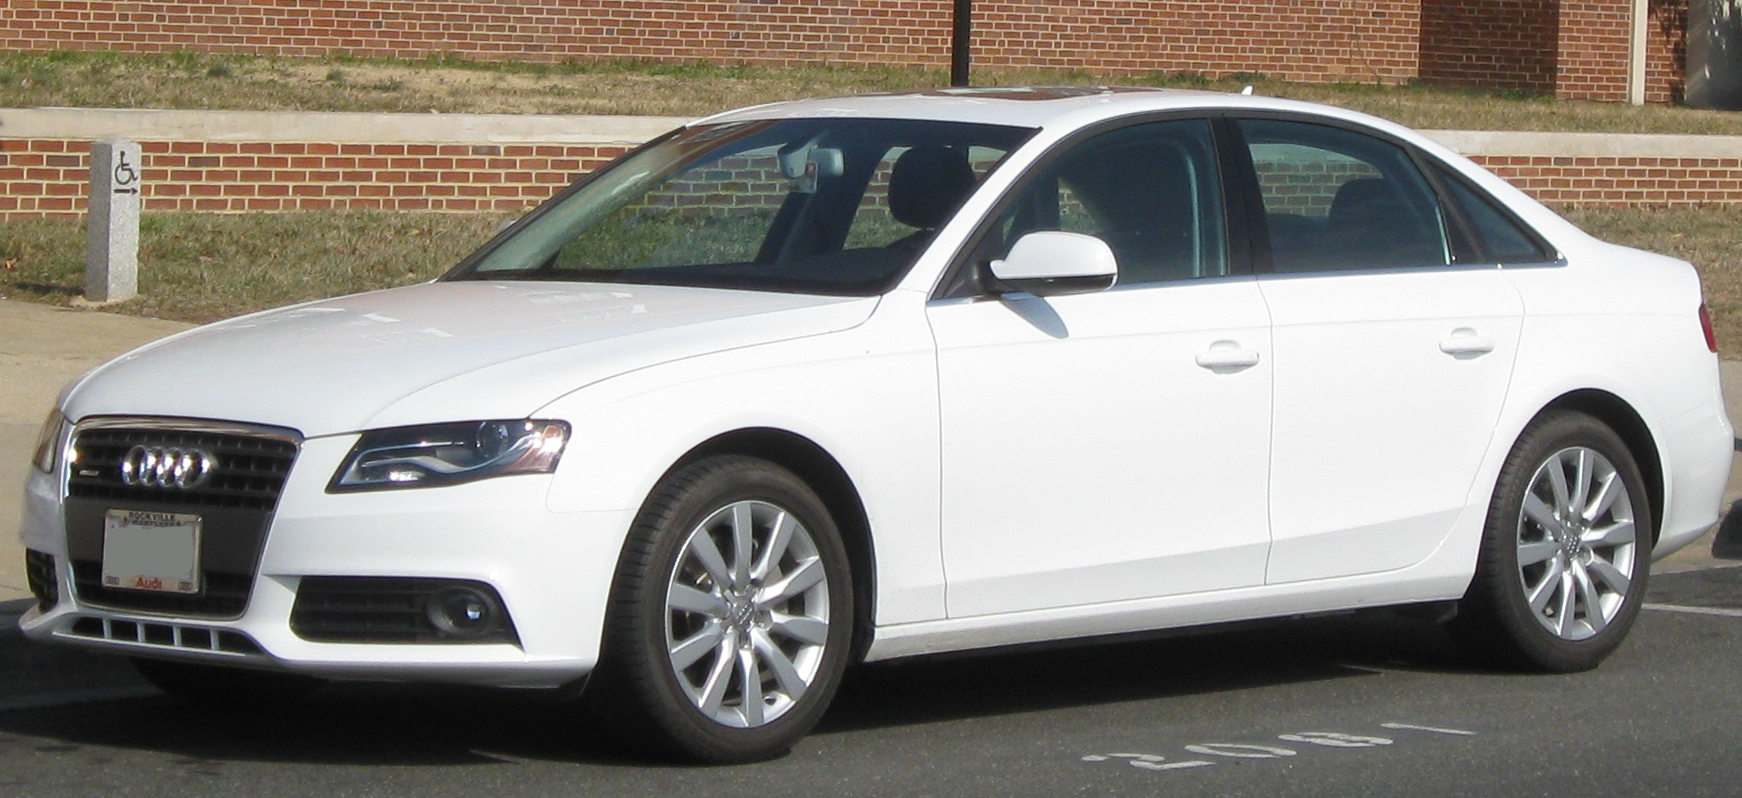 File:Audi A4 sedan -- 02-18-2011.jpg - Wikimedia Commons